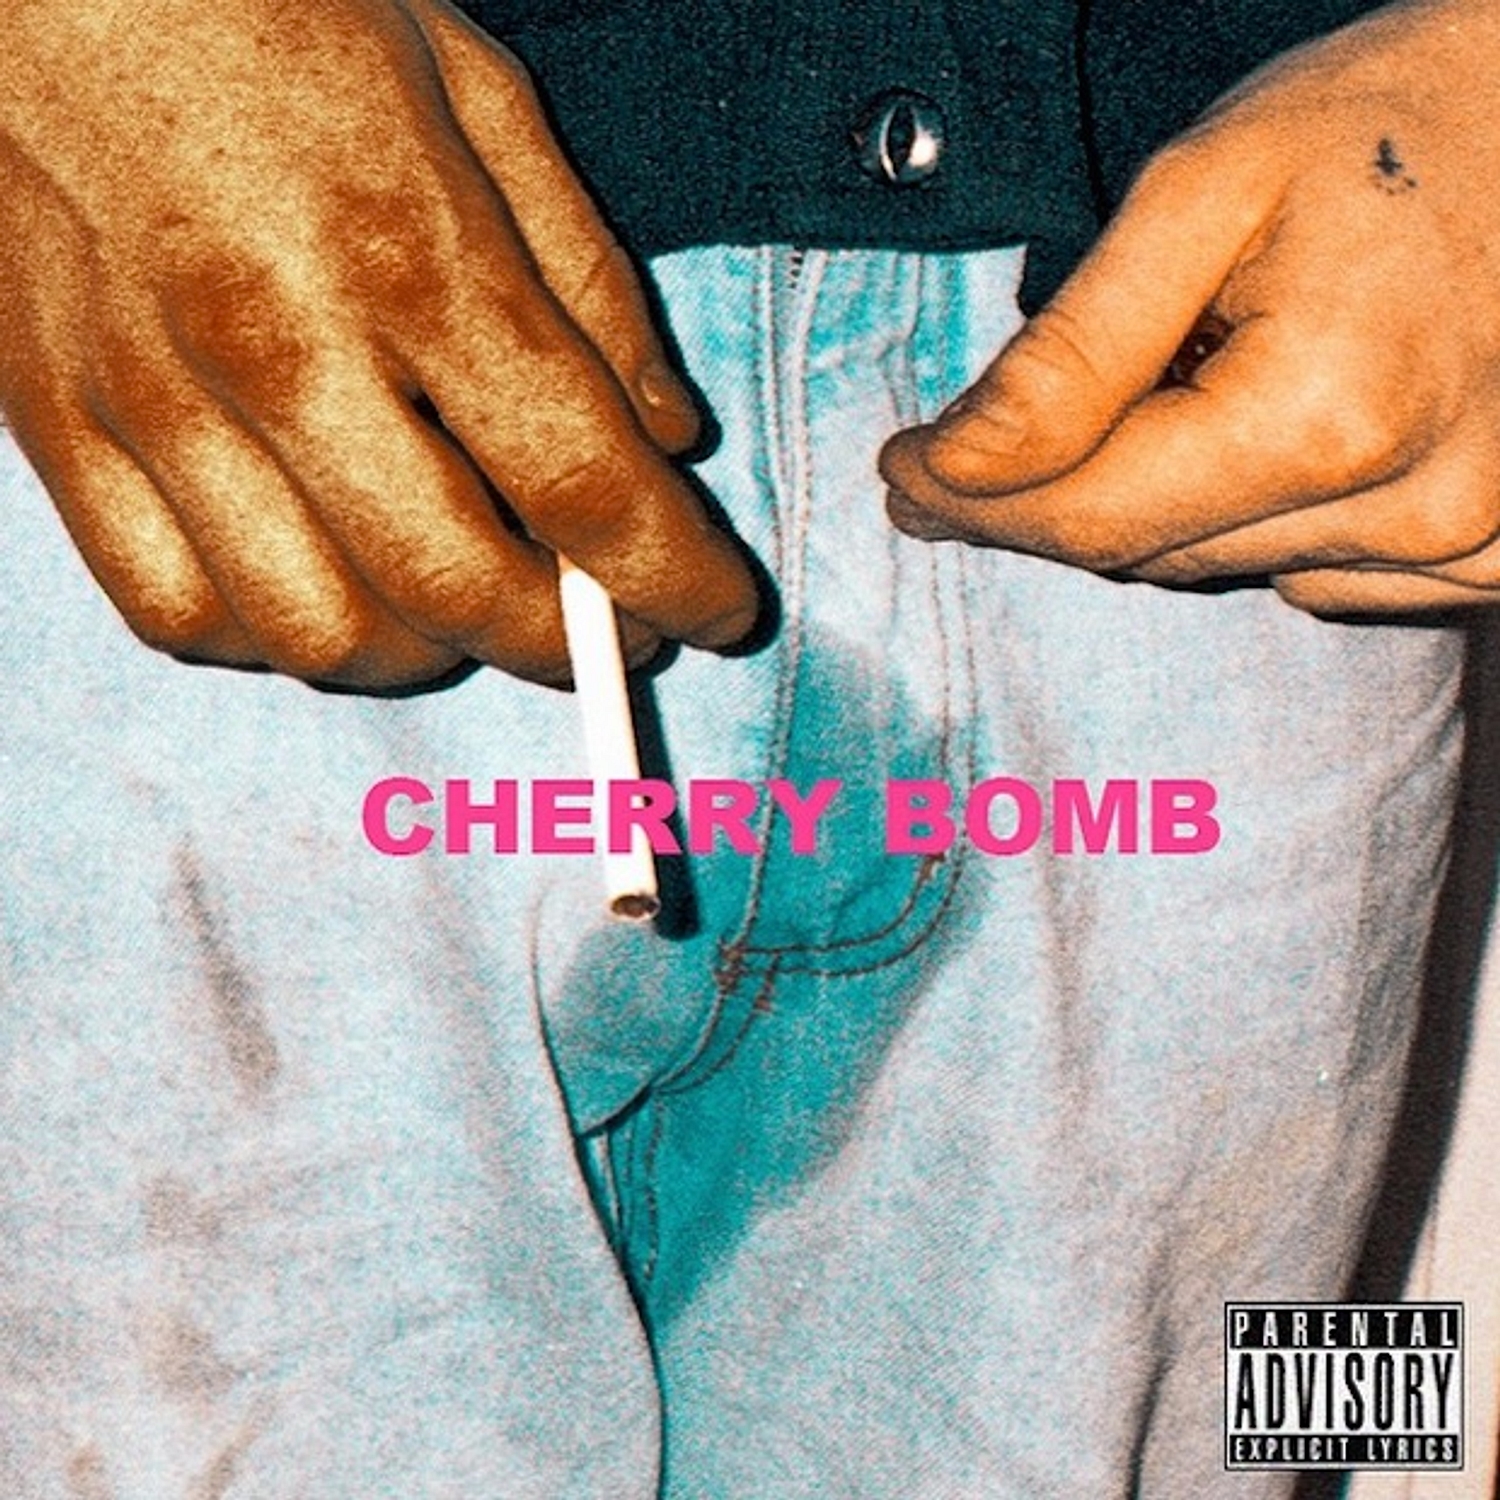 Tyler, the Creator wanted to get Jamiroquai on his album, shares alternative ‘Cherry Bomb’ art